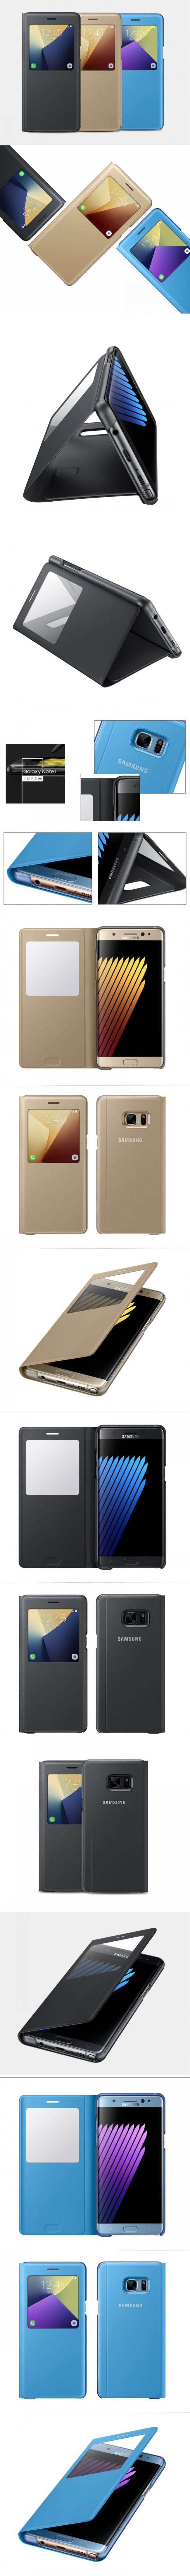 Bao da Note 7 S-View Cover chính hãng Samsung (Full Box) 3362